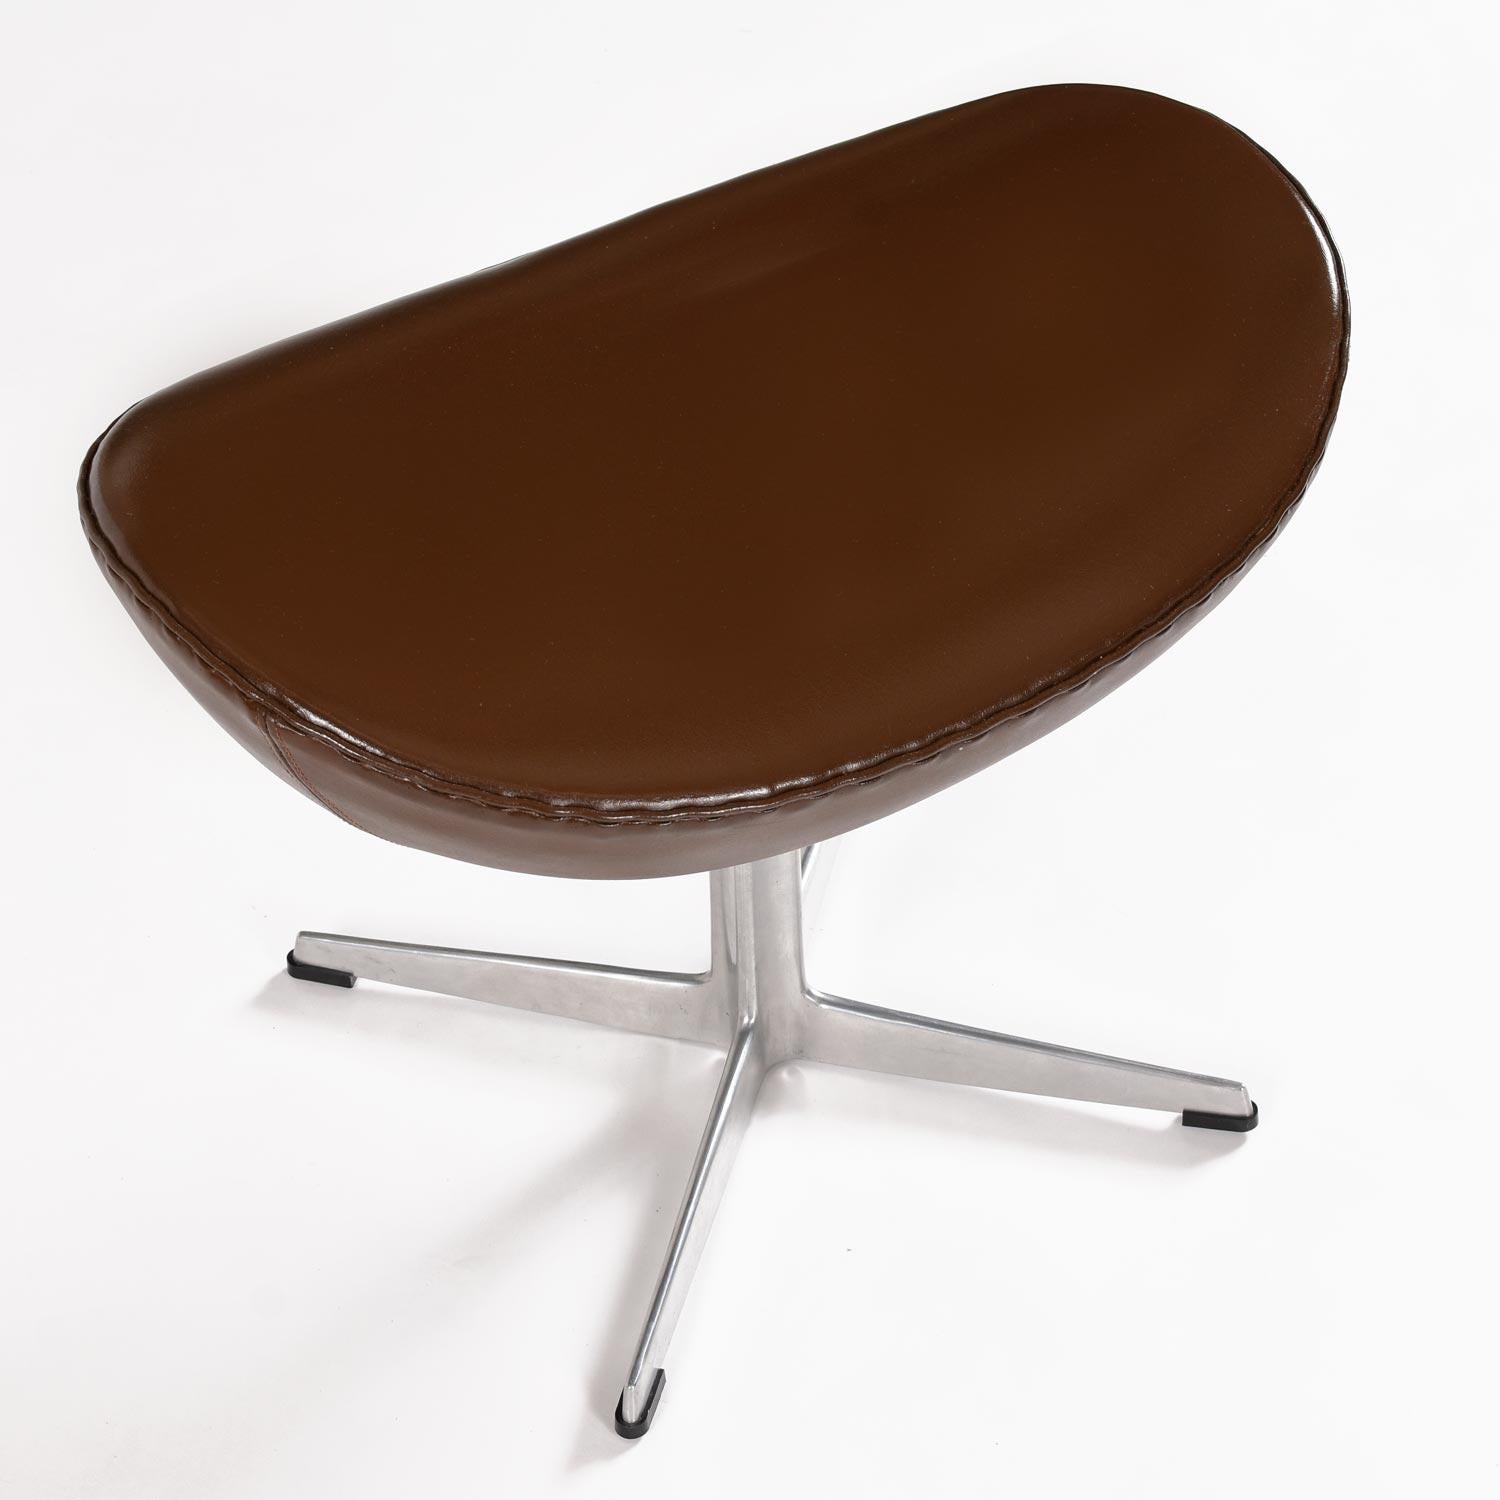 1974 Original Brown Leather Arne Jacobsen for Fritz Hansen Egg Chair & Ottoman For Sale 4